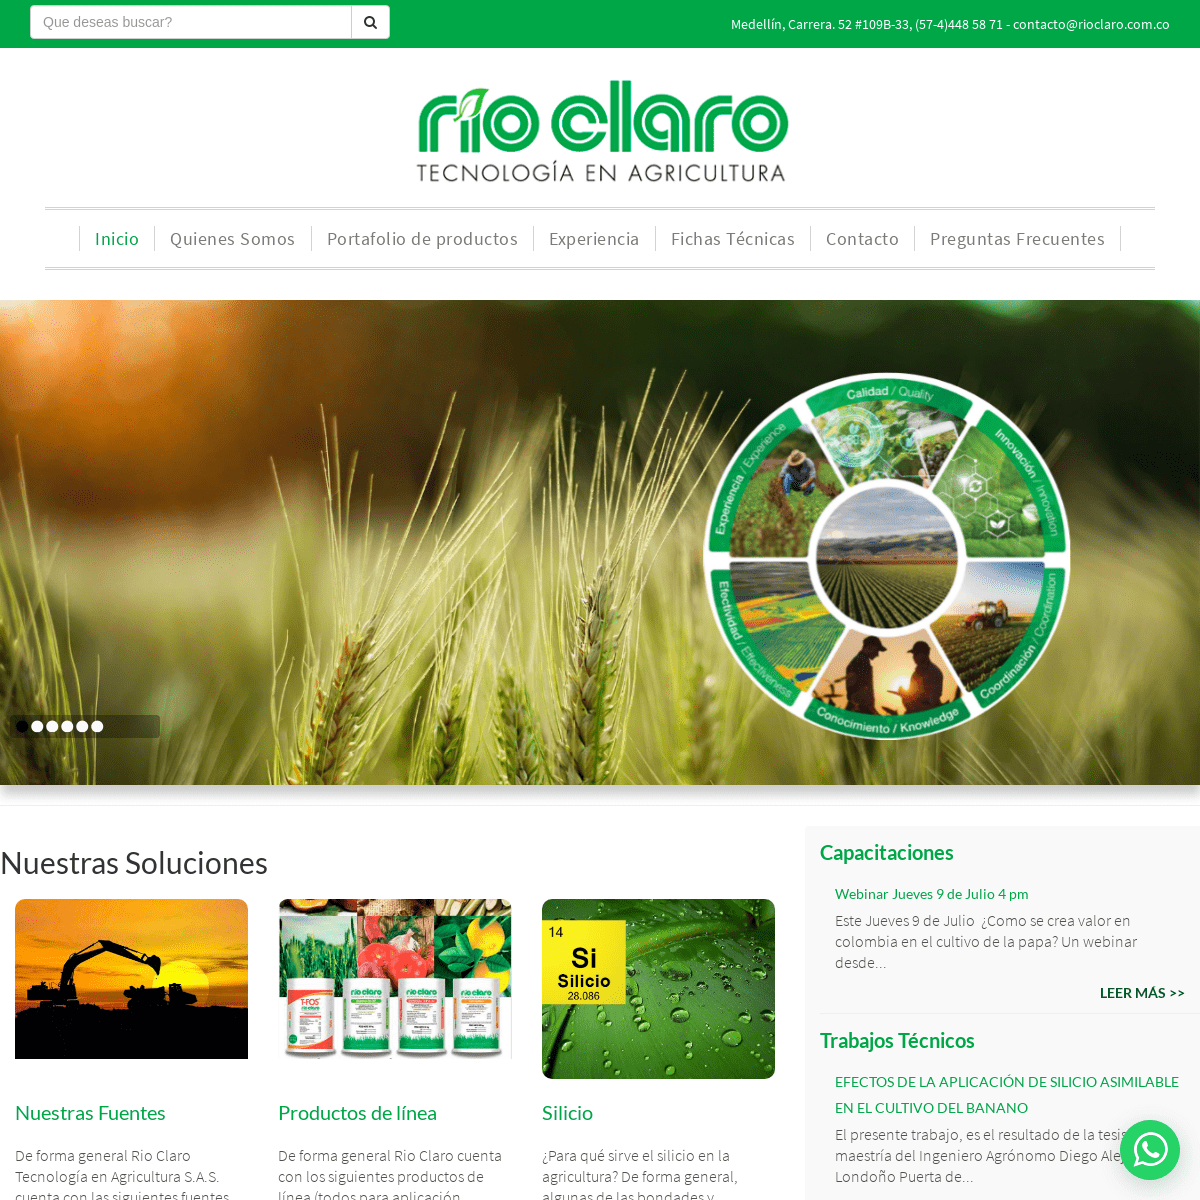 A complete backup of rioclaro.com.co